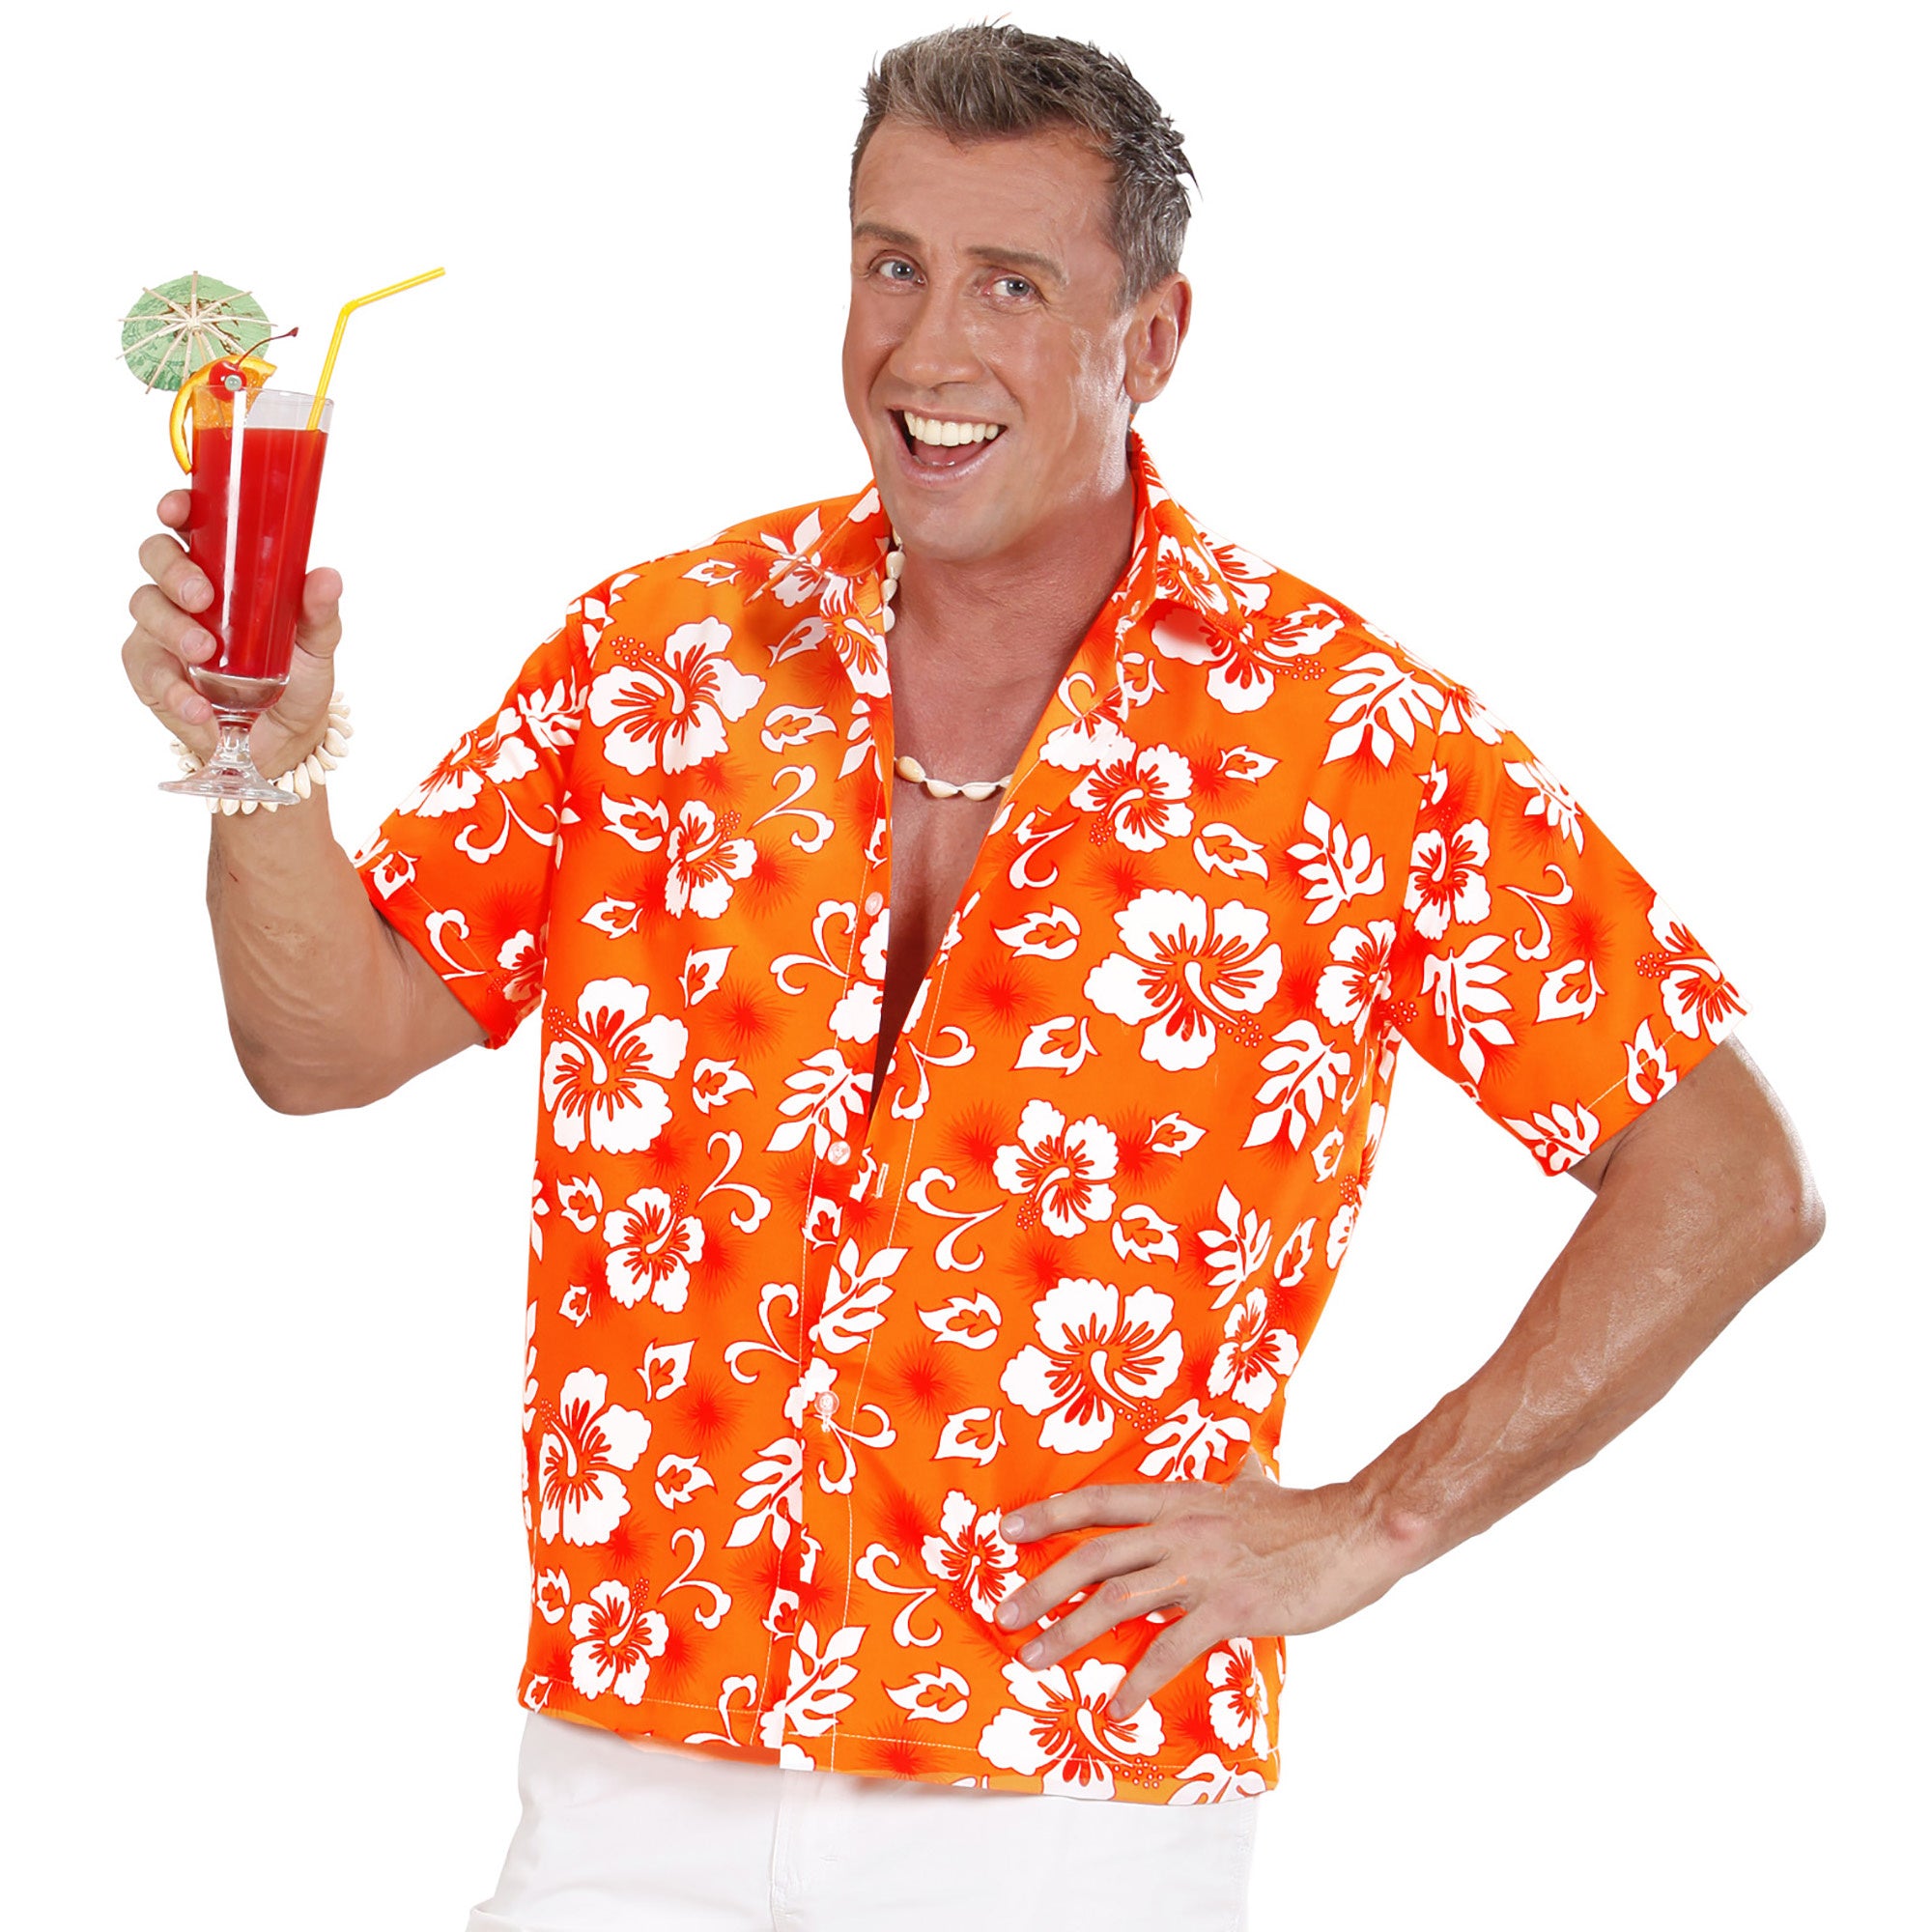 "Hawaïaanse oranje blouse voor mannen - Verkleedkleding - XL"